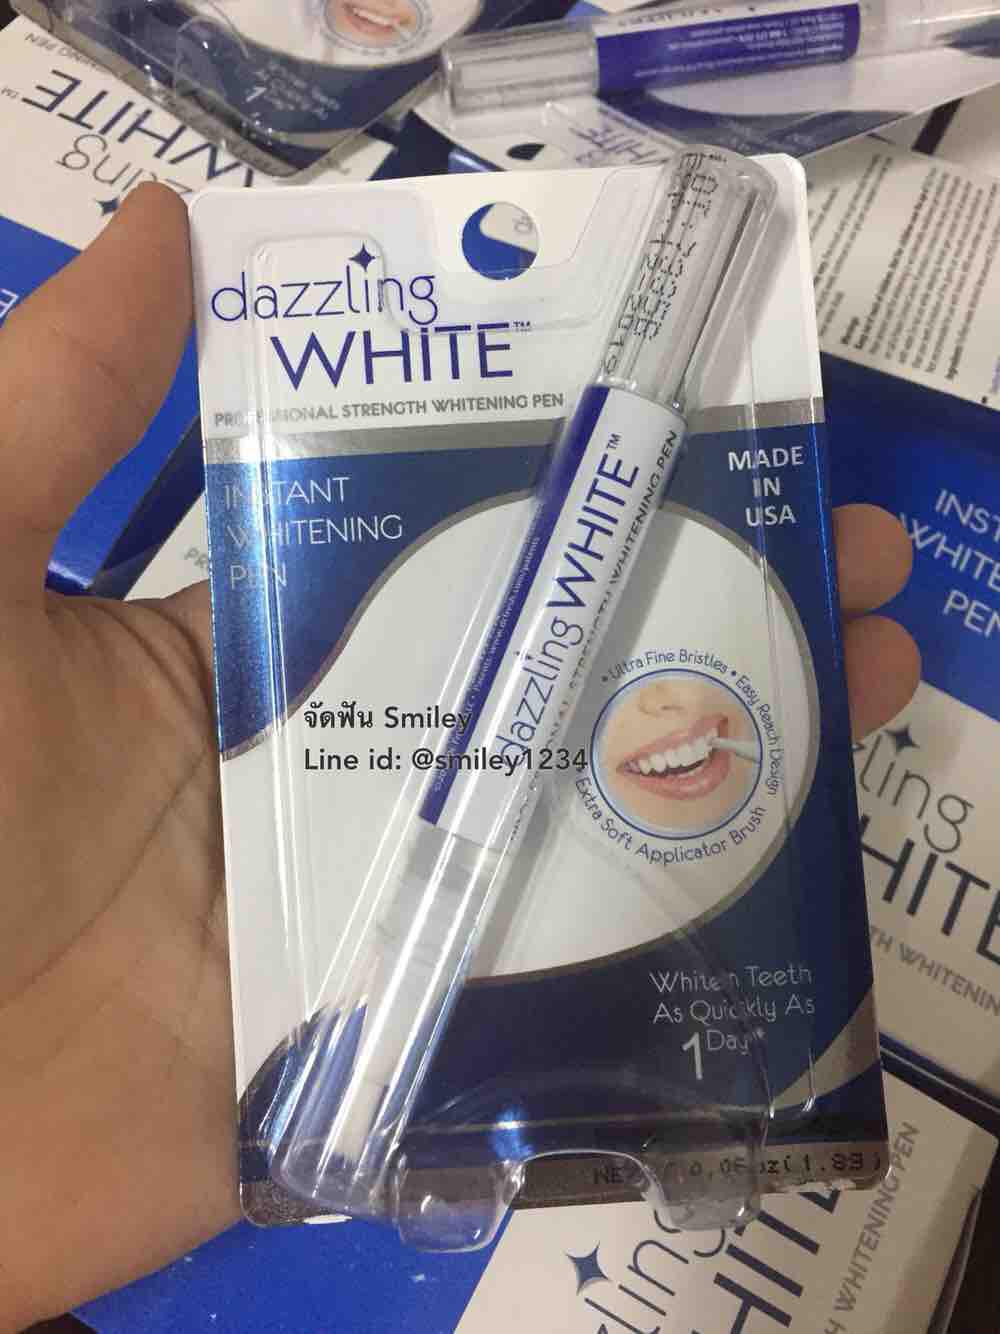 Dazzling White เจลฟอกฟันขาว ของแท้จากอเมริกา ถ้าไม่แท้คืนเงินทันที 2 เท่า exp. 03/2020